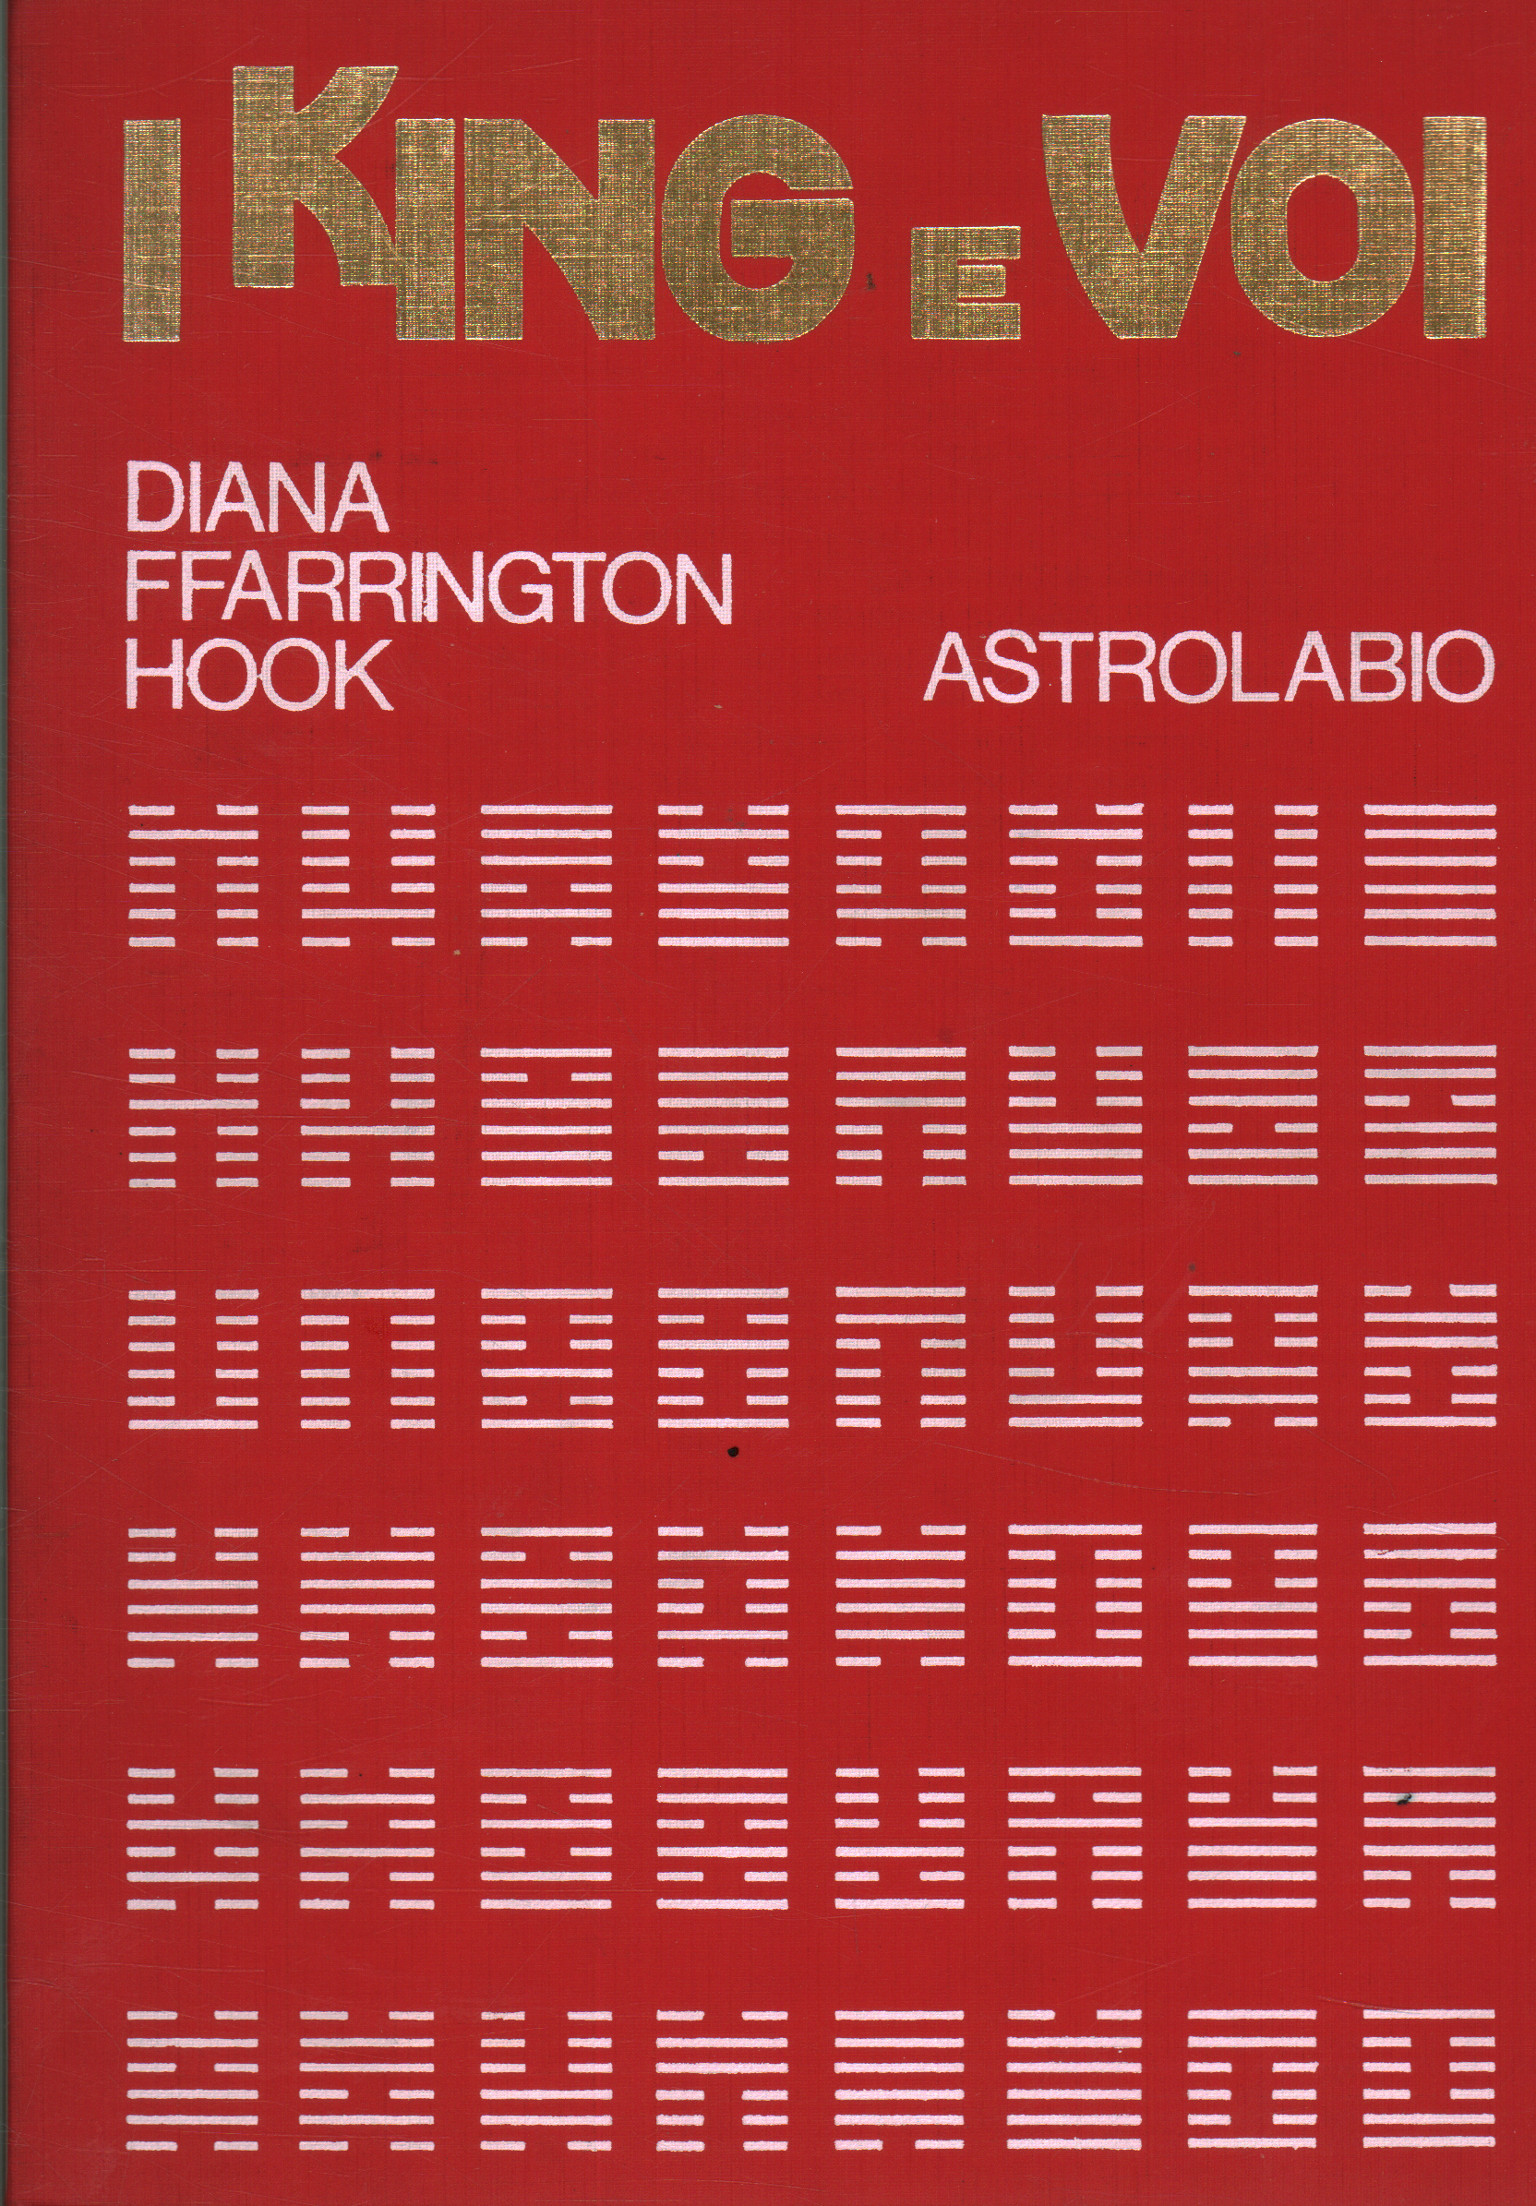 L I Ching and You, Diana Ffarington Hook